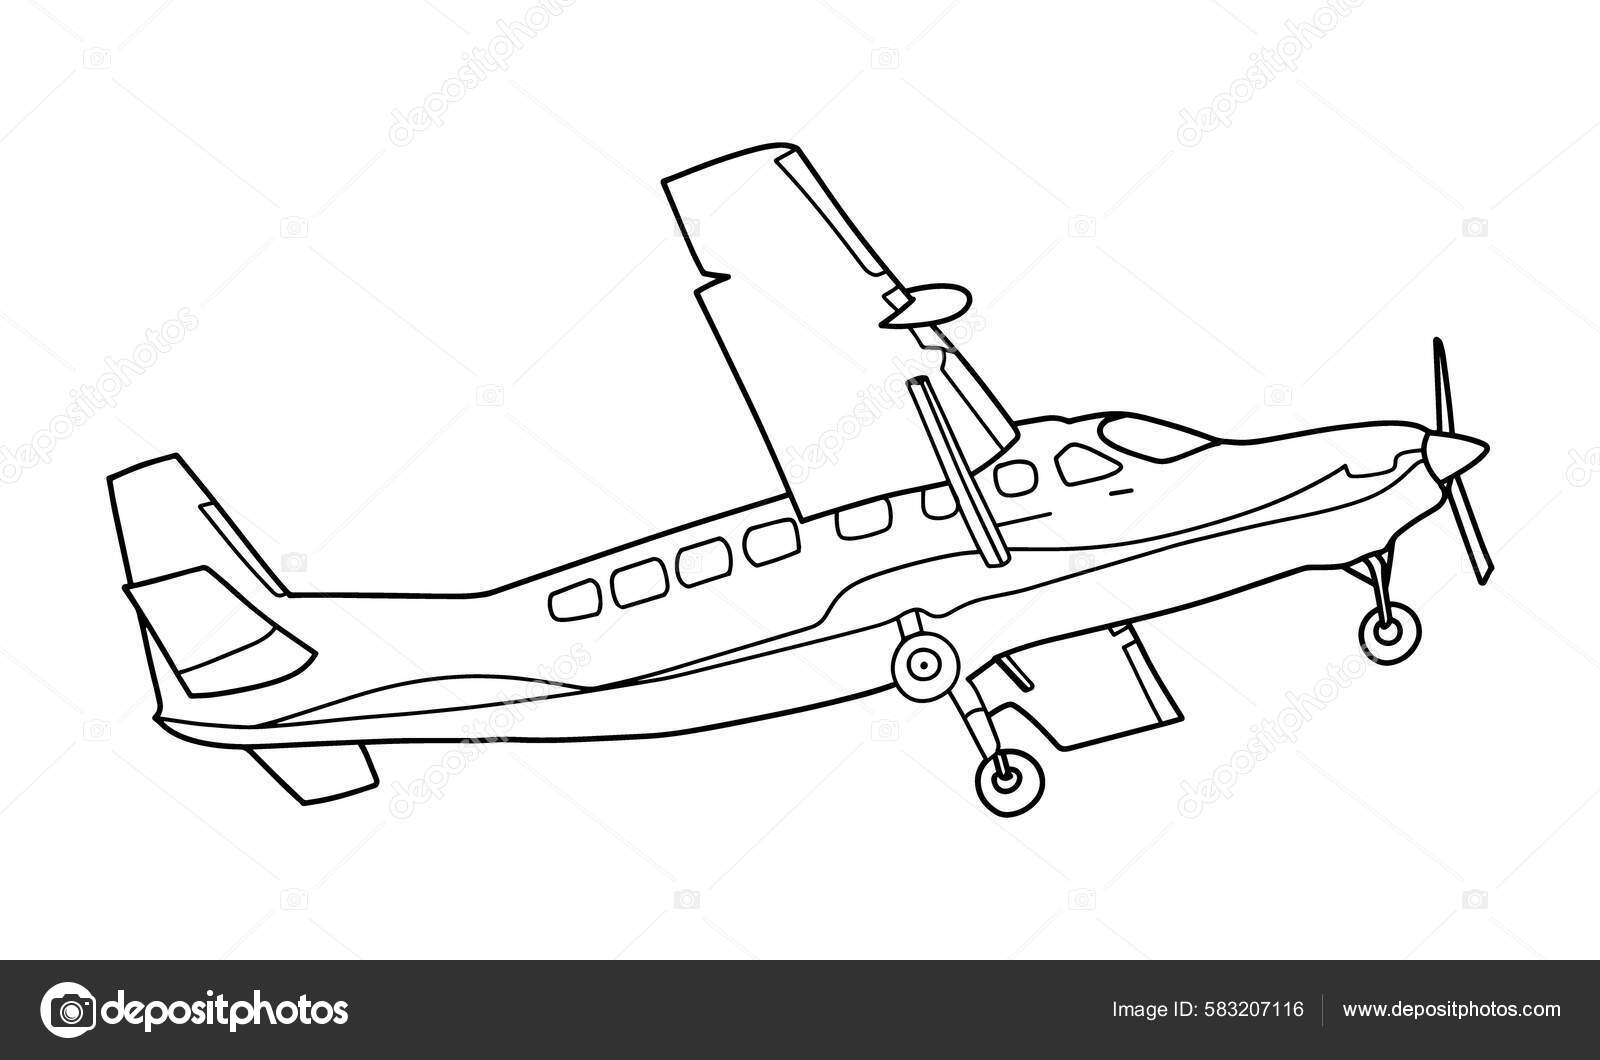 https://st.depositphotos.com/58824238/58320/v/1600/depositphotos_583207116-stock-illustration-airplane-drawing-line-art-vector.jpg